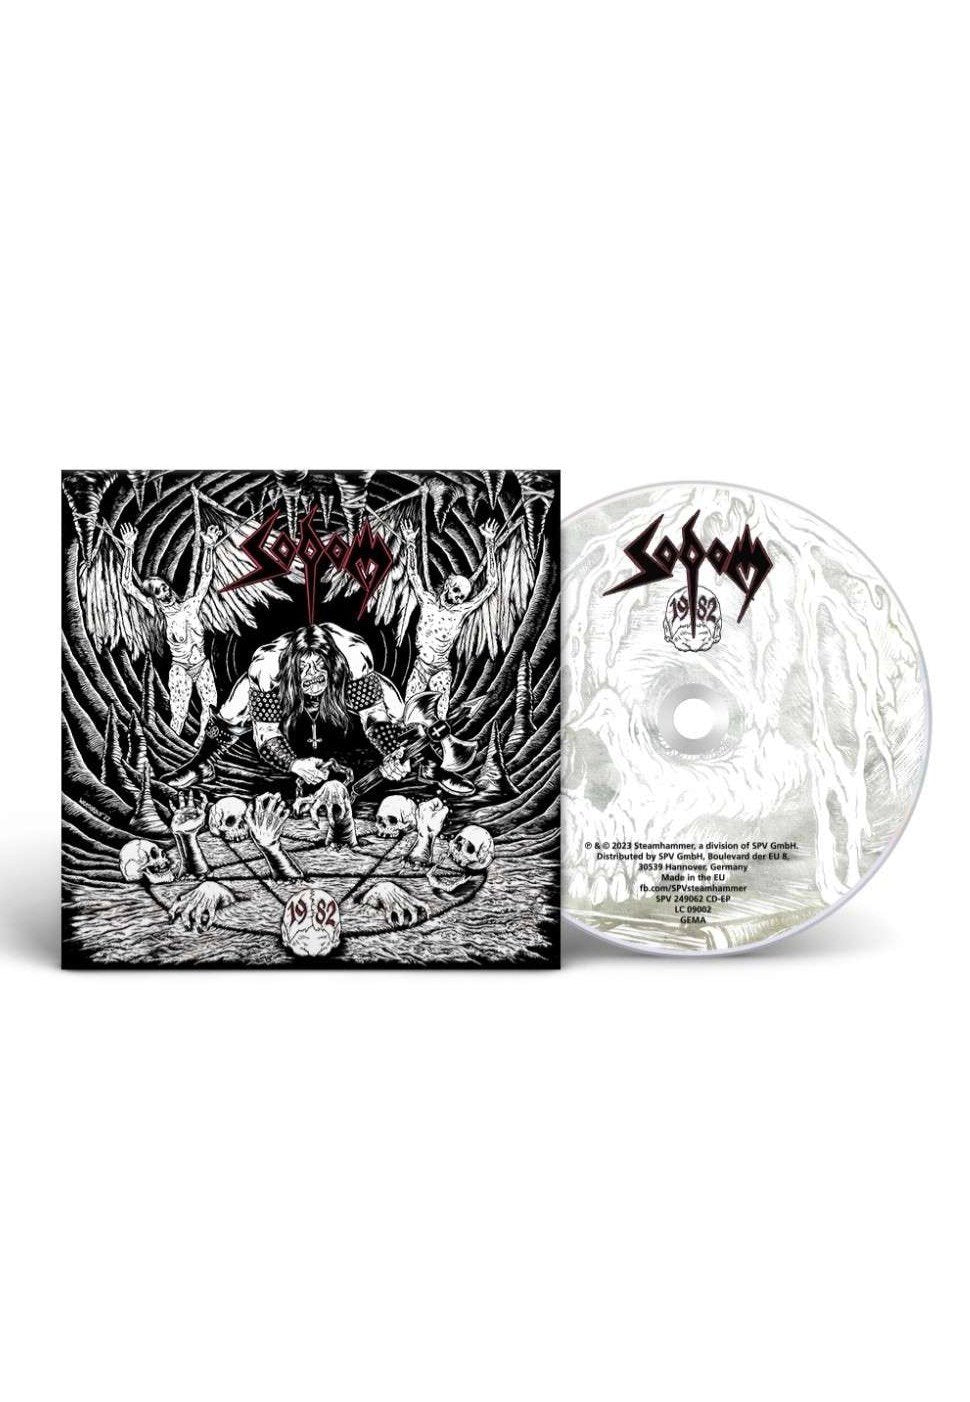 Sodom - 1982 - CD